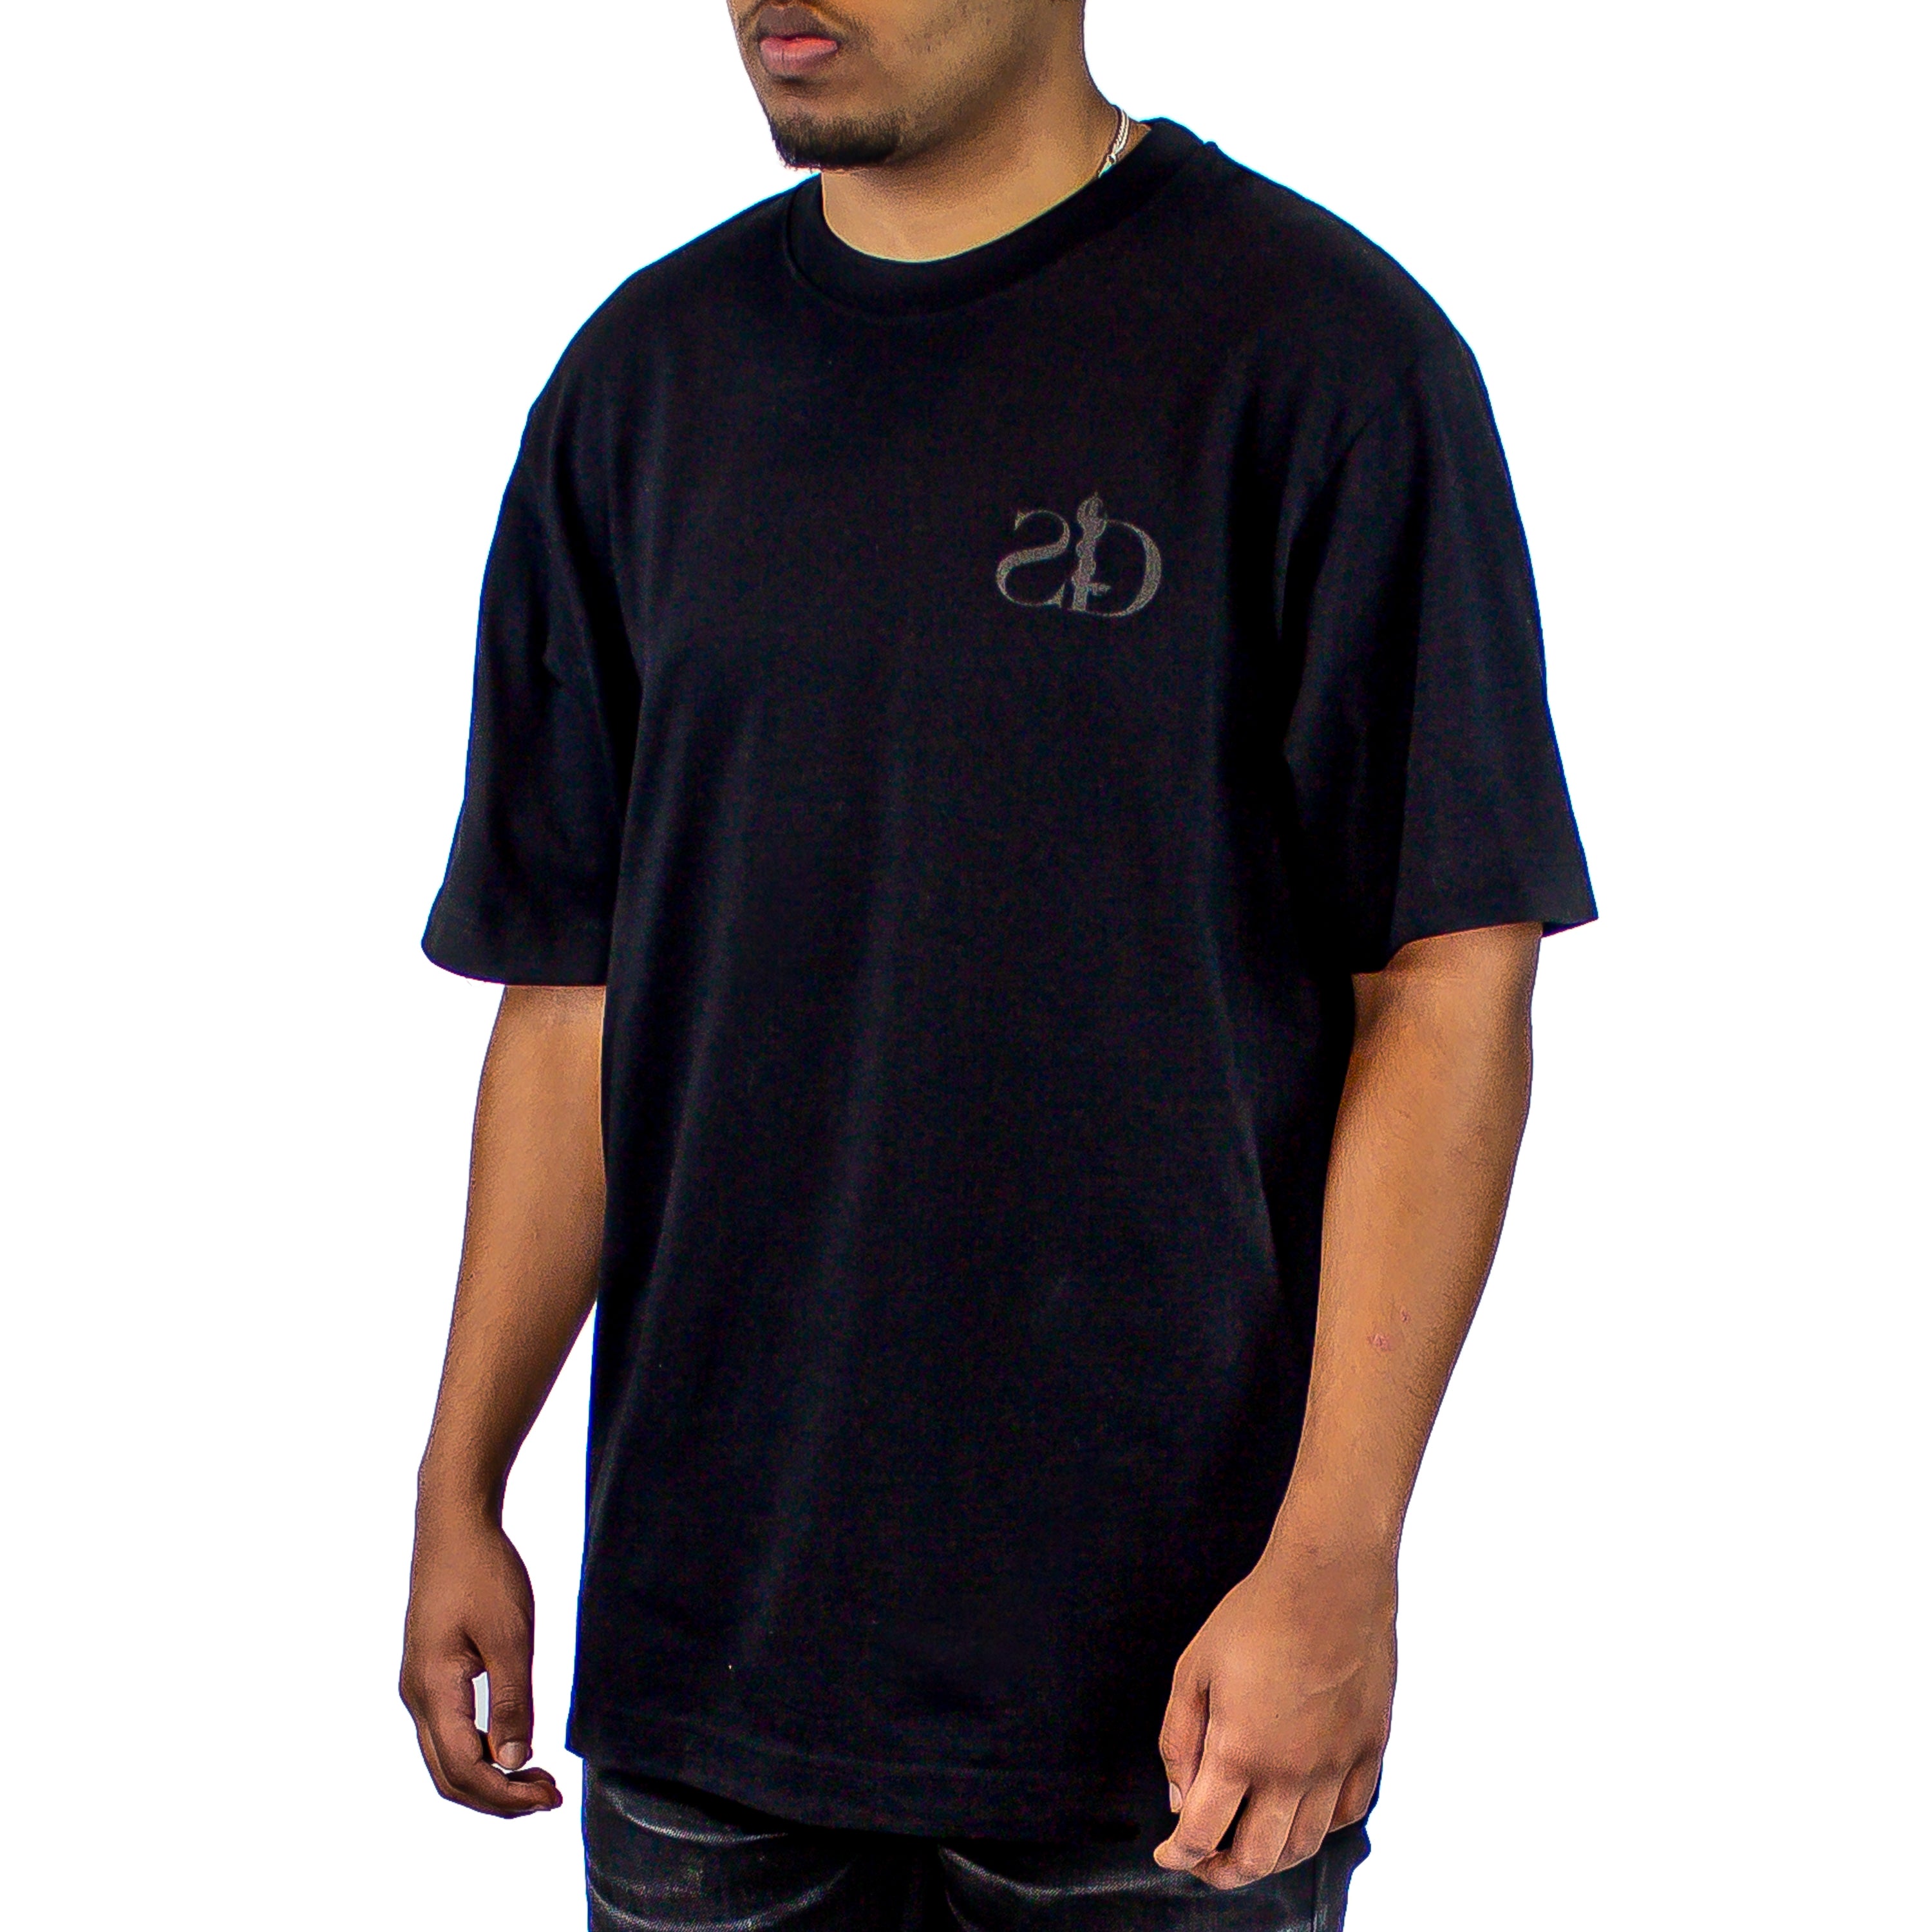 Black short sleeve multi logo t-shirt / black print design